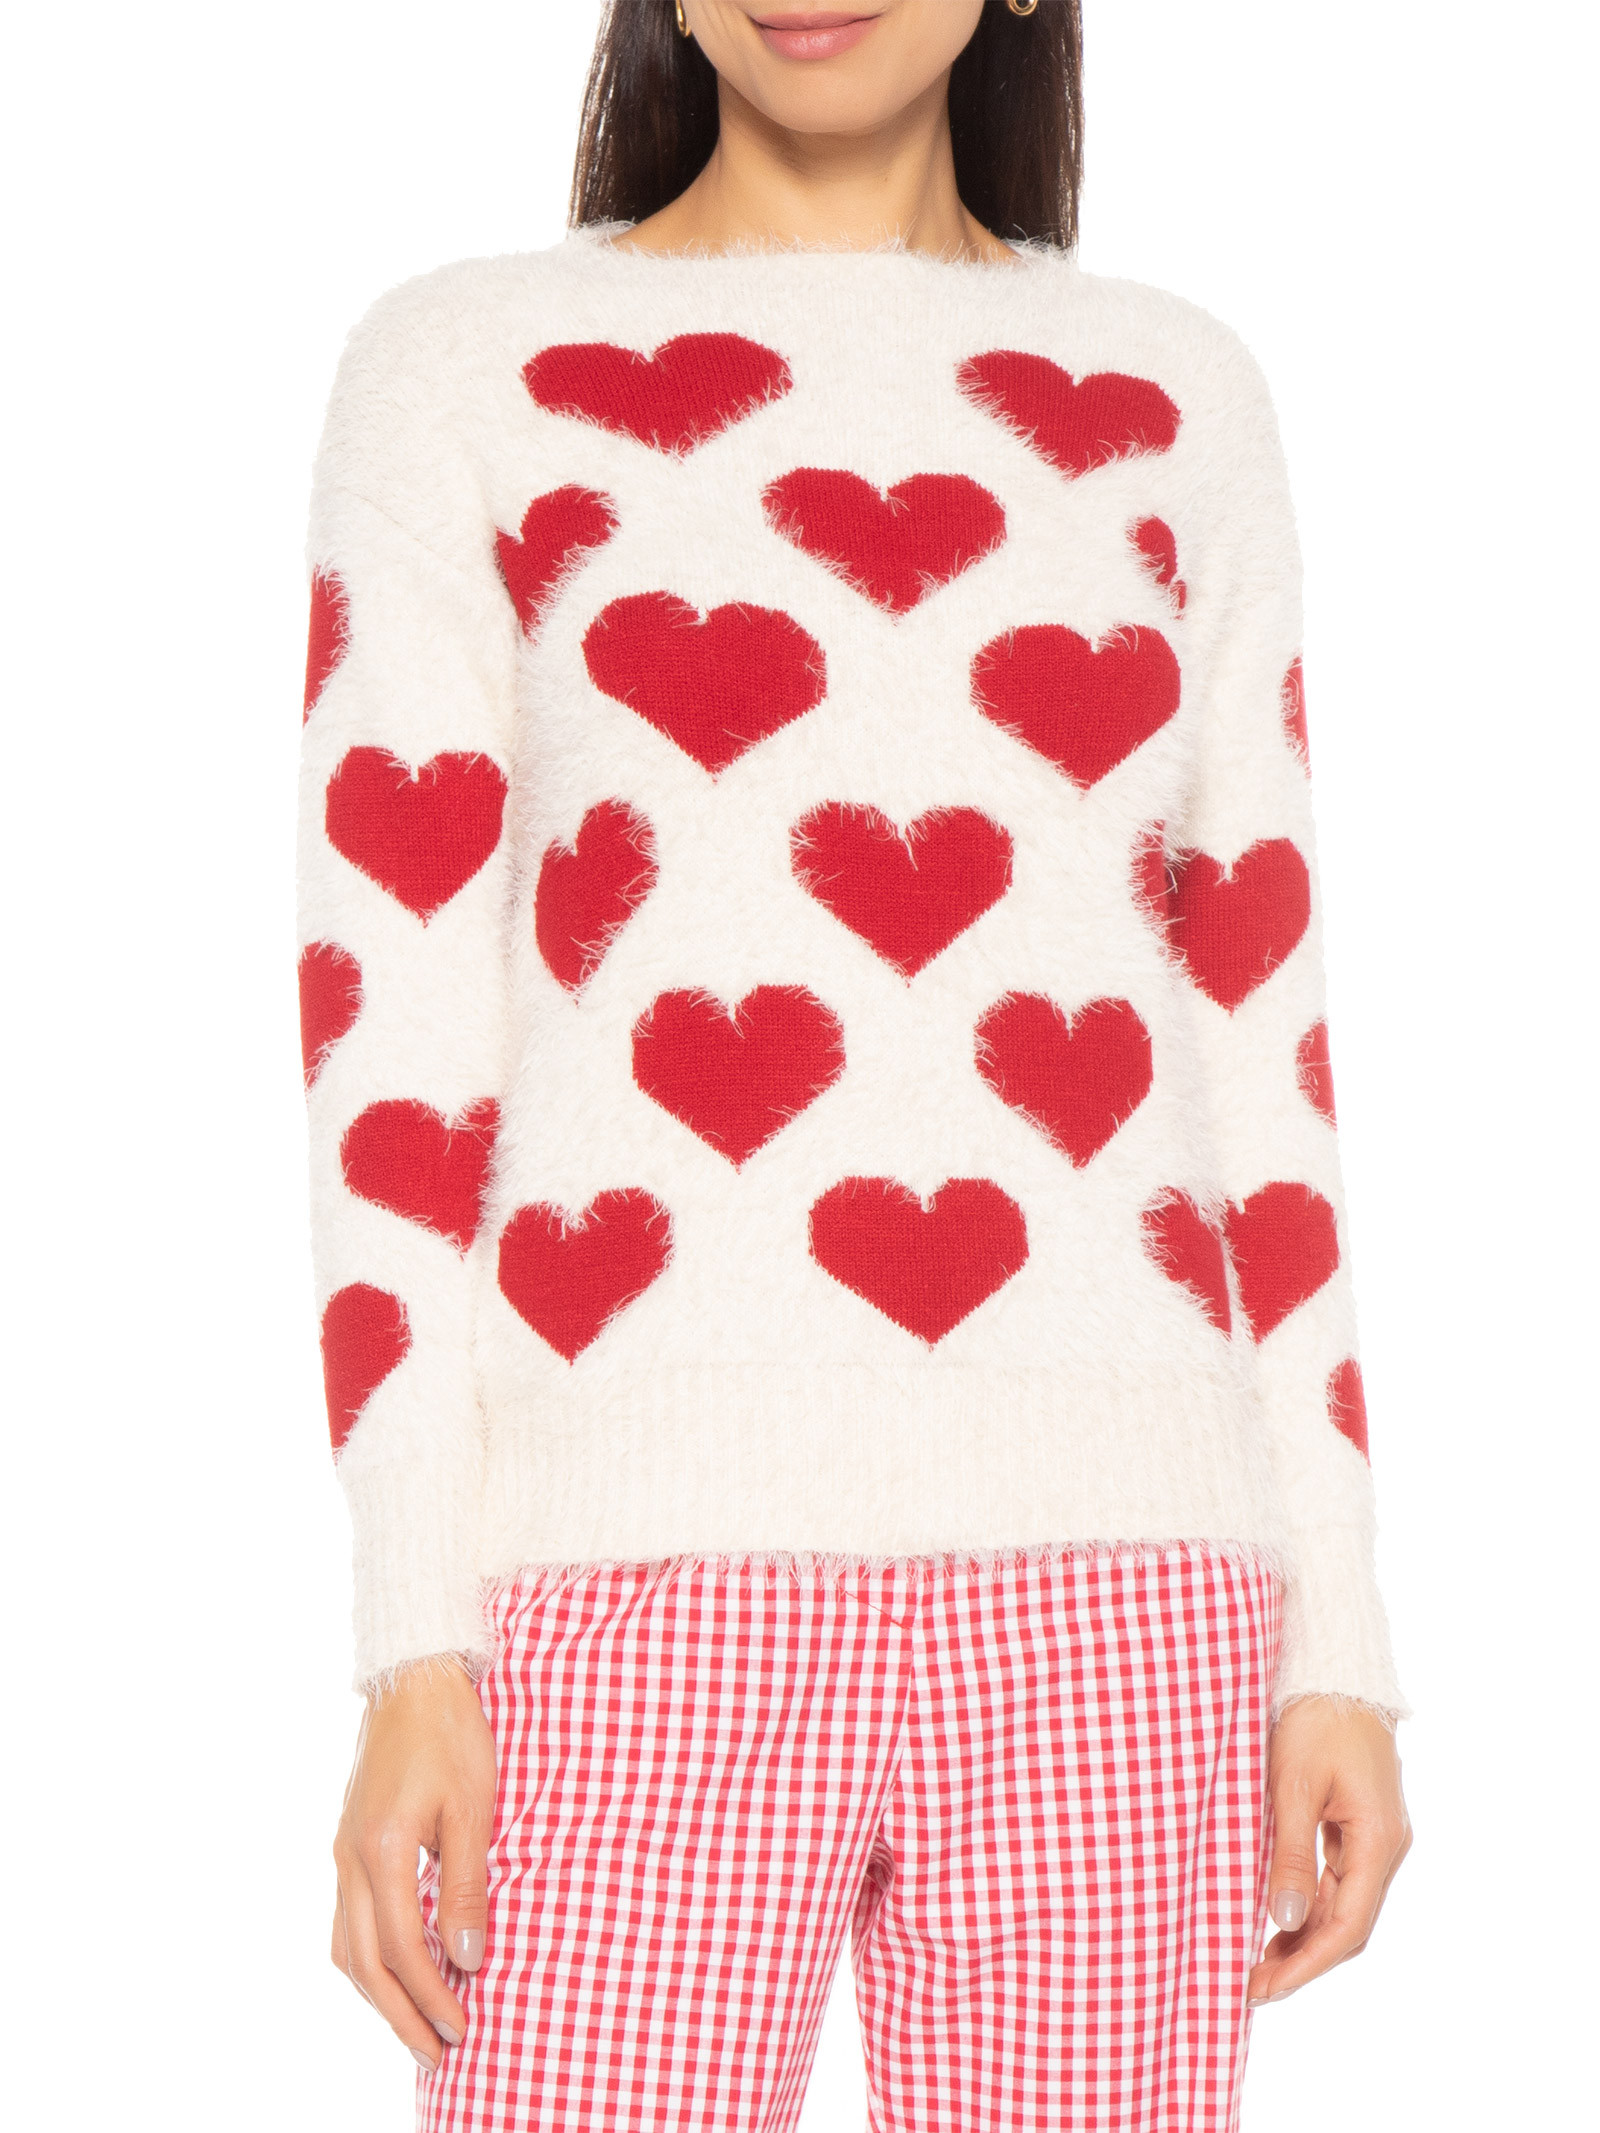 Suéter de corações, da Market 33